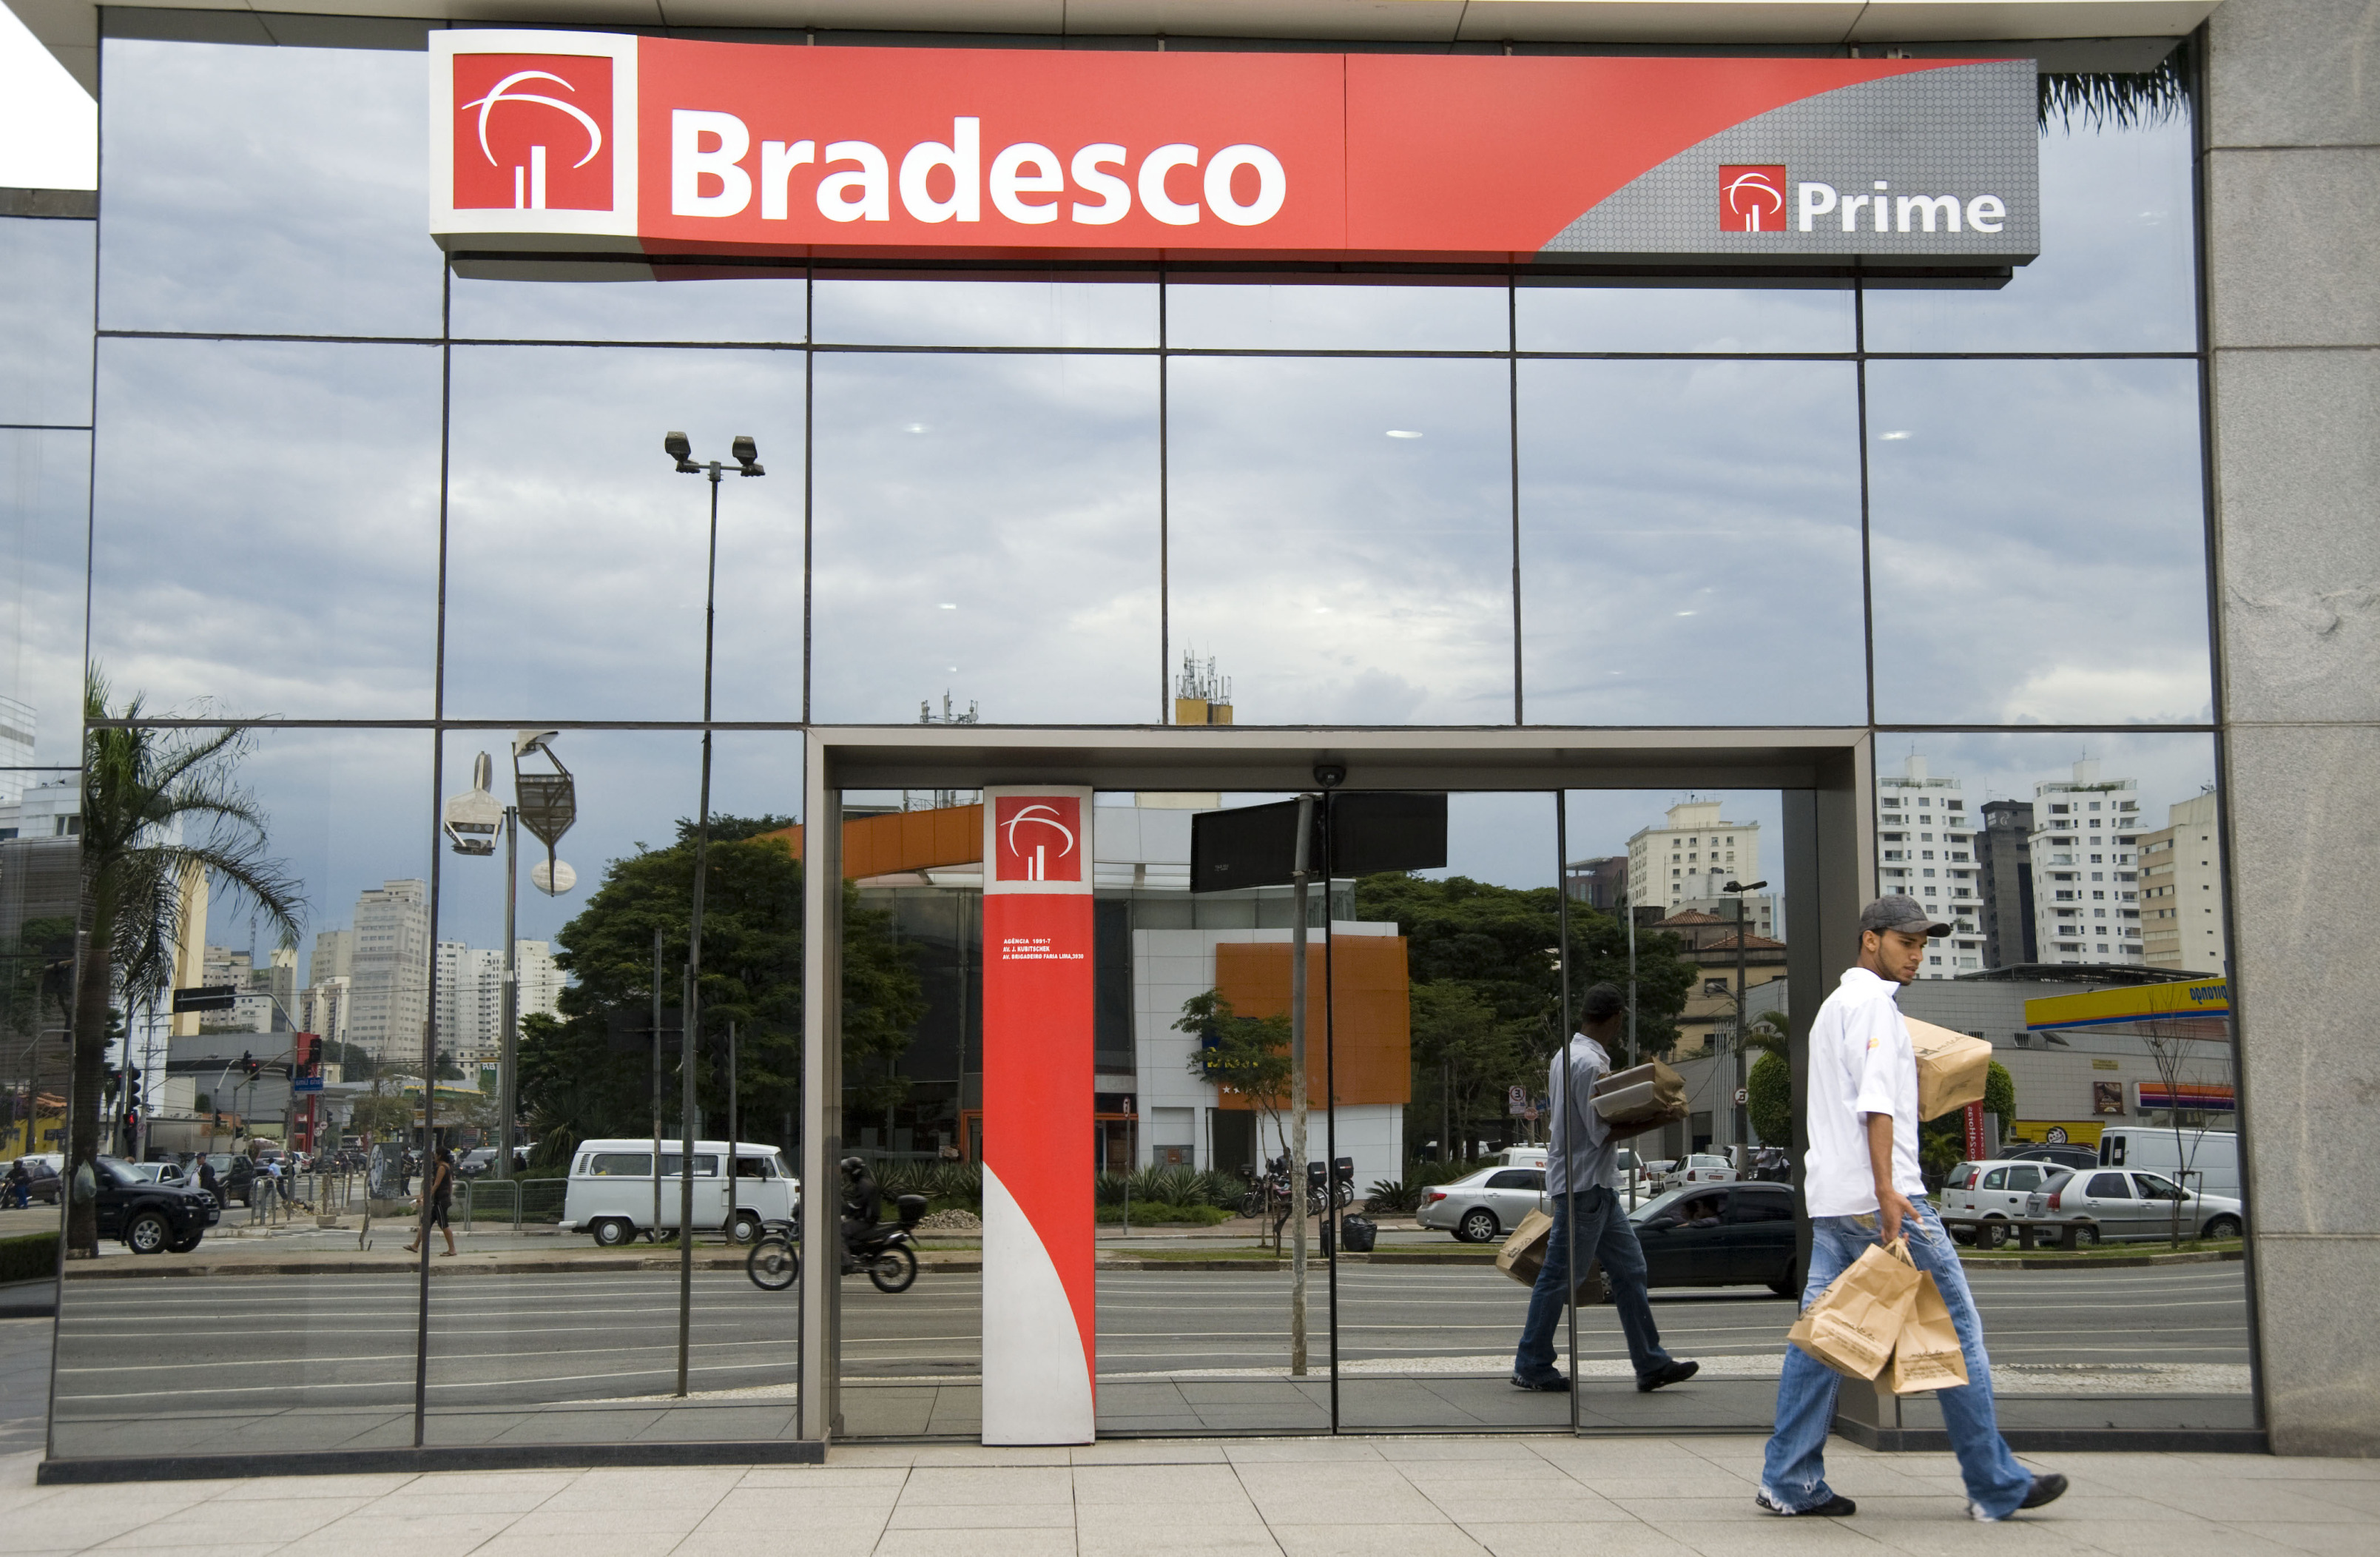 Banco Bradesco: Culture